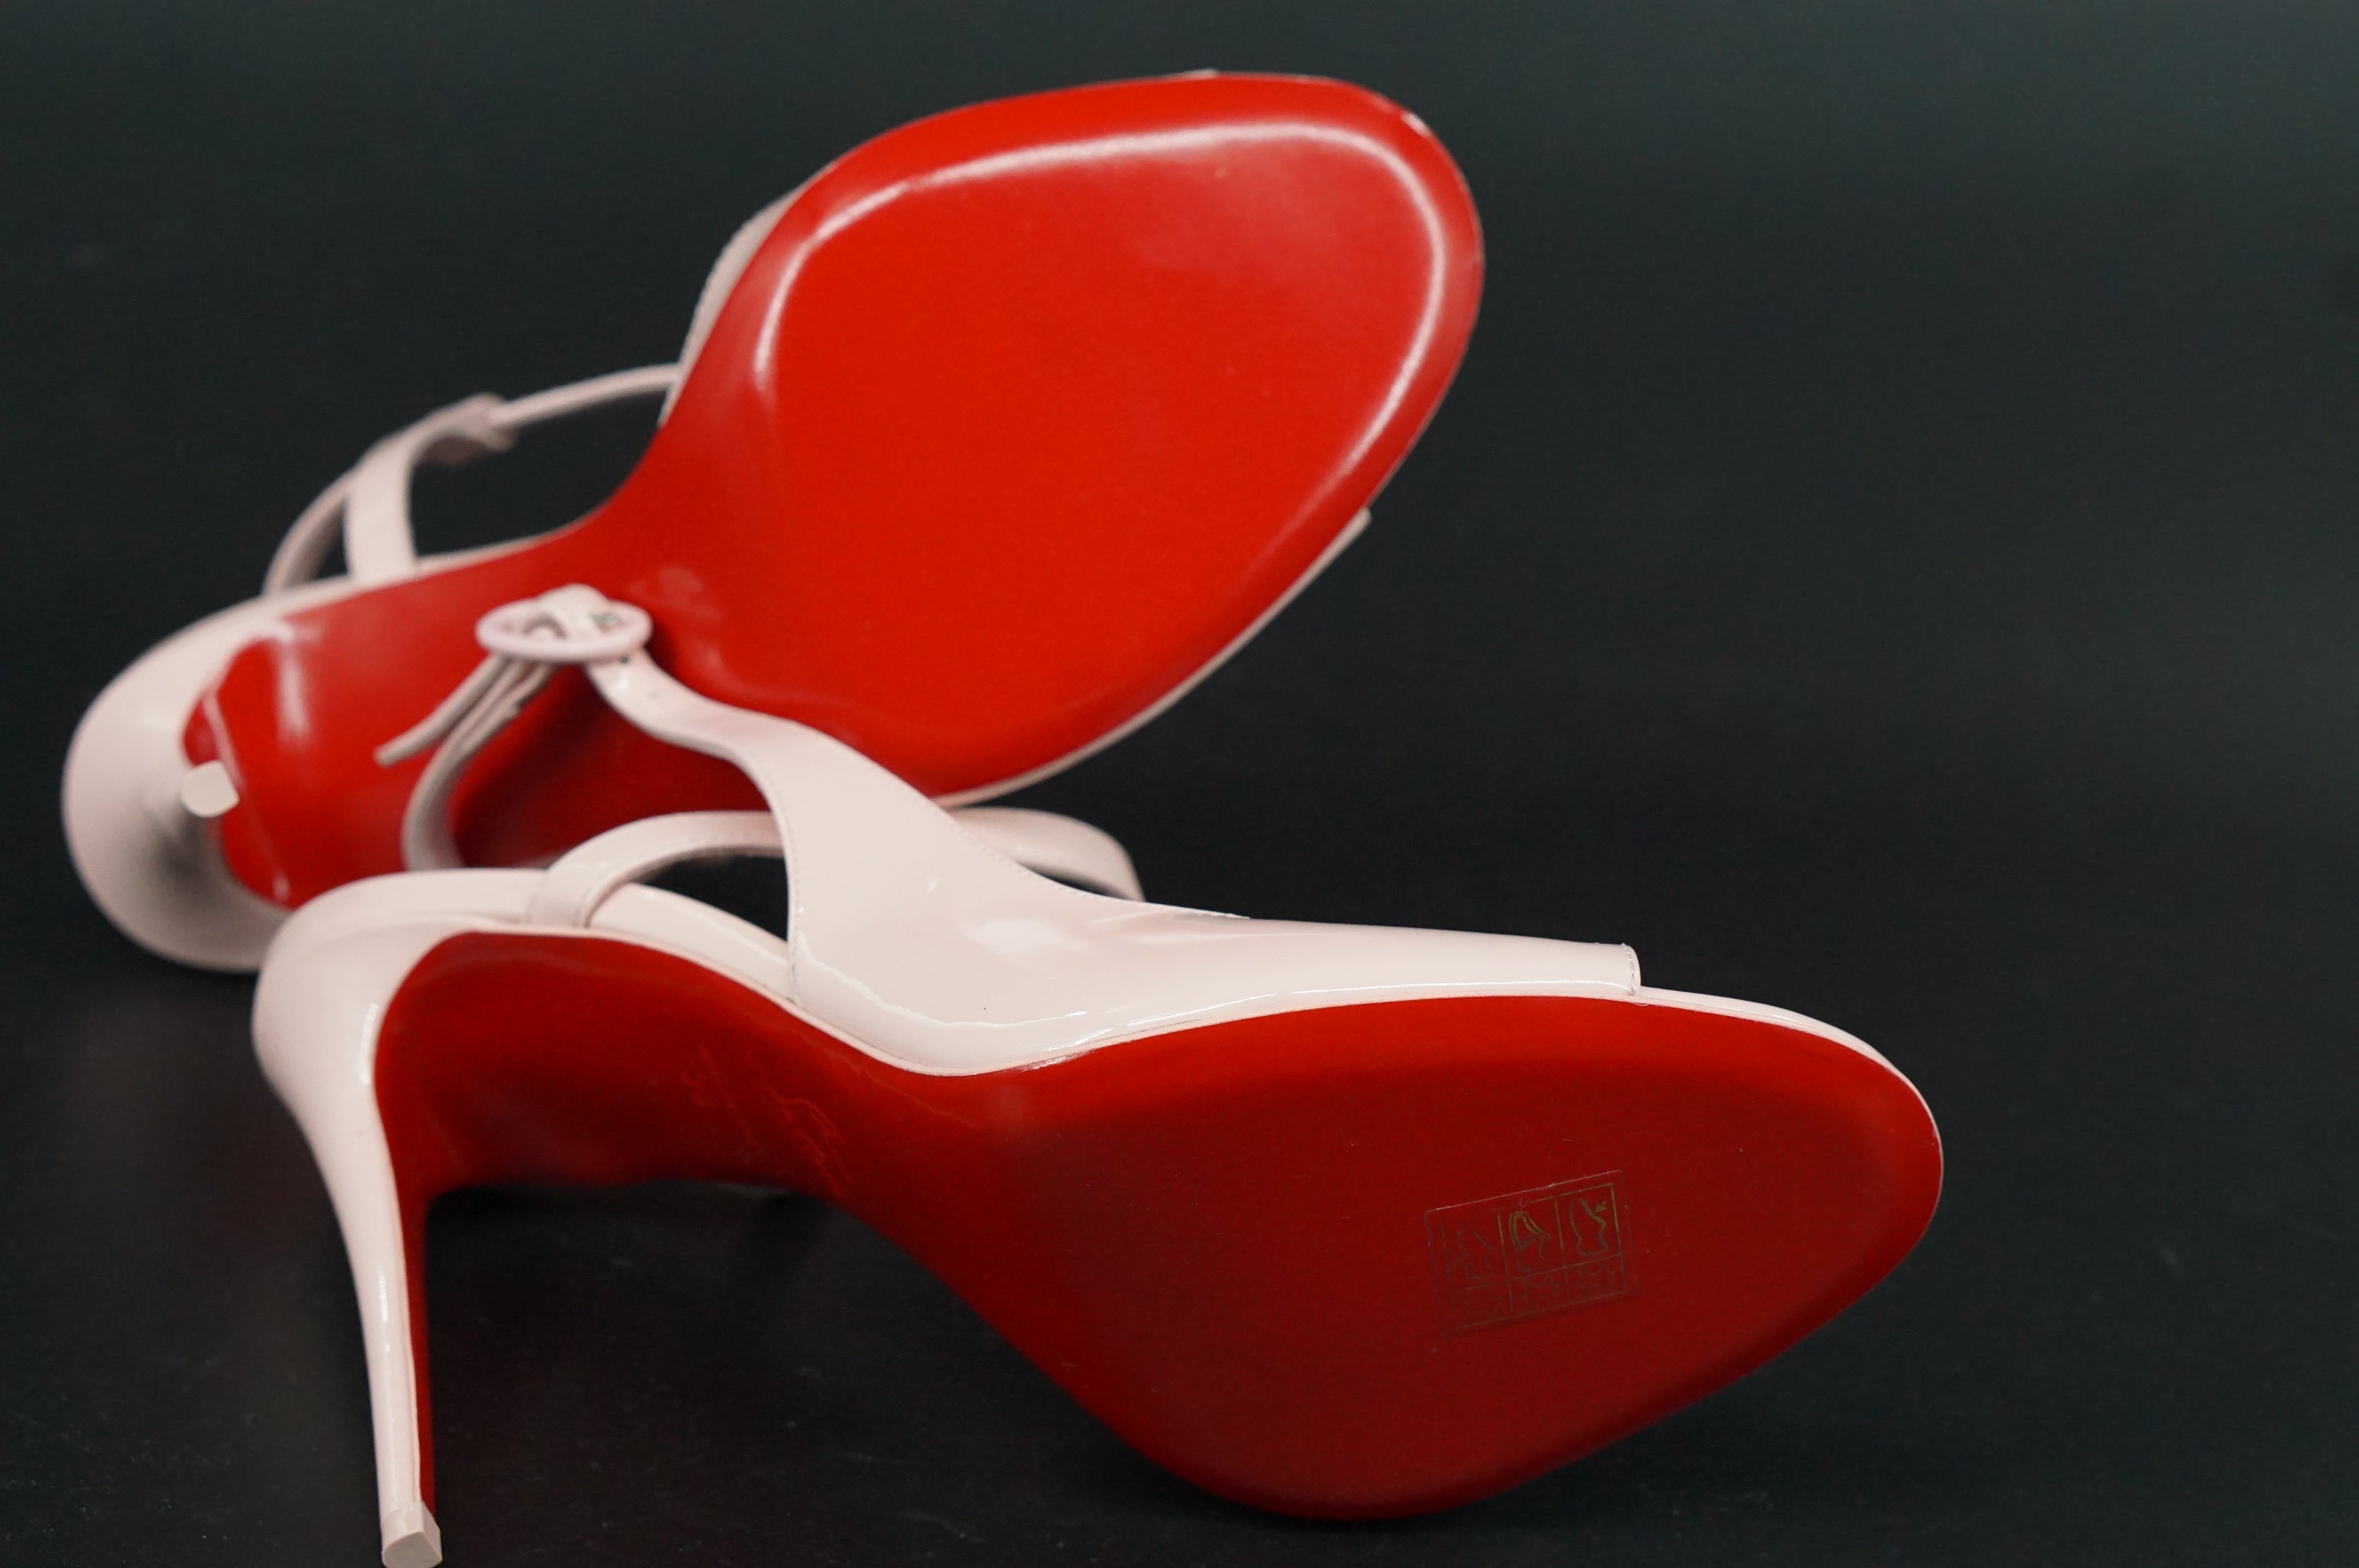 Christian Louboutin Jenlove 100 Pink Patent Sandals Size 38 Ankle Strap $945 NIB